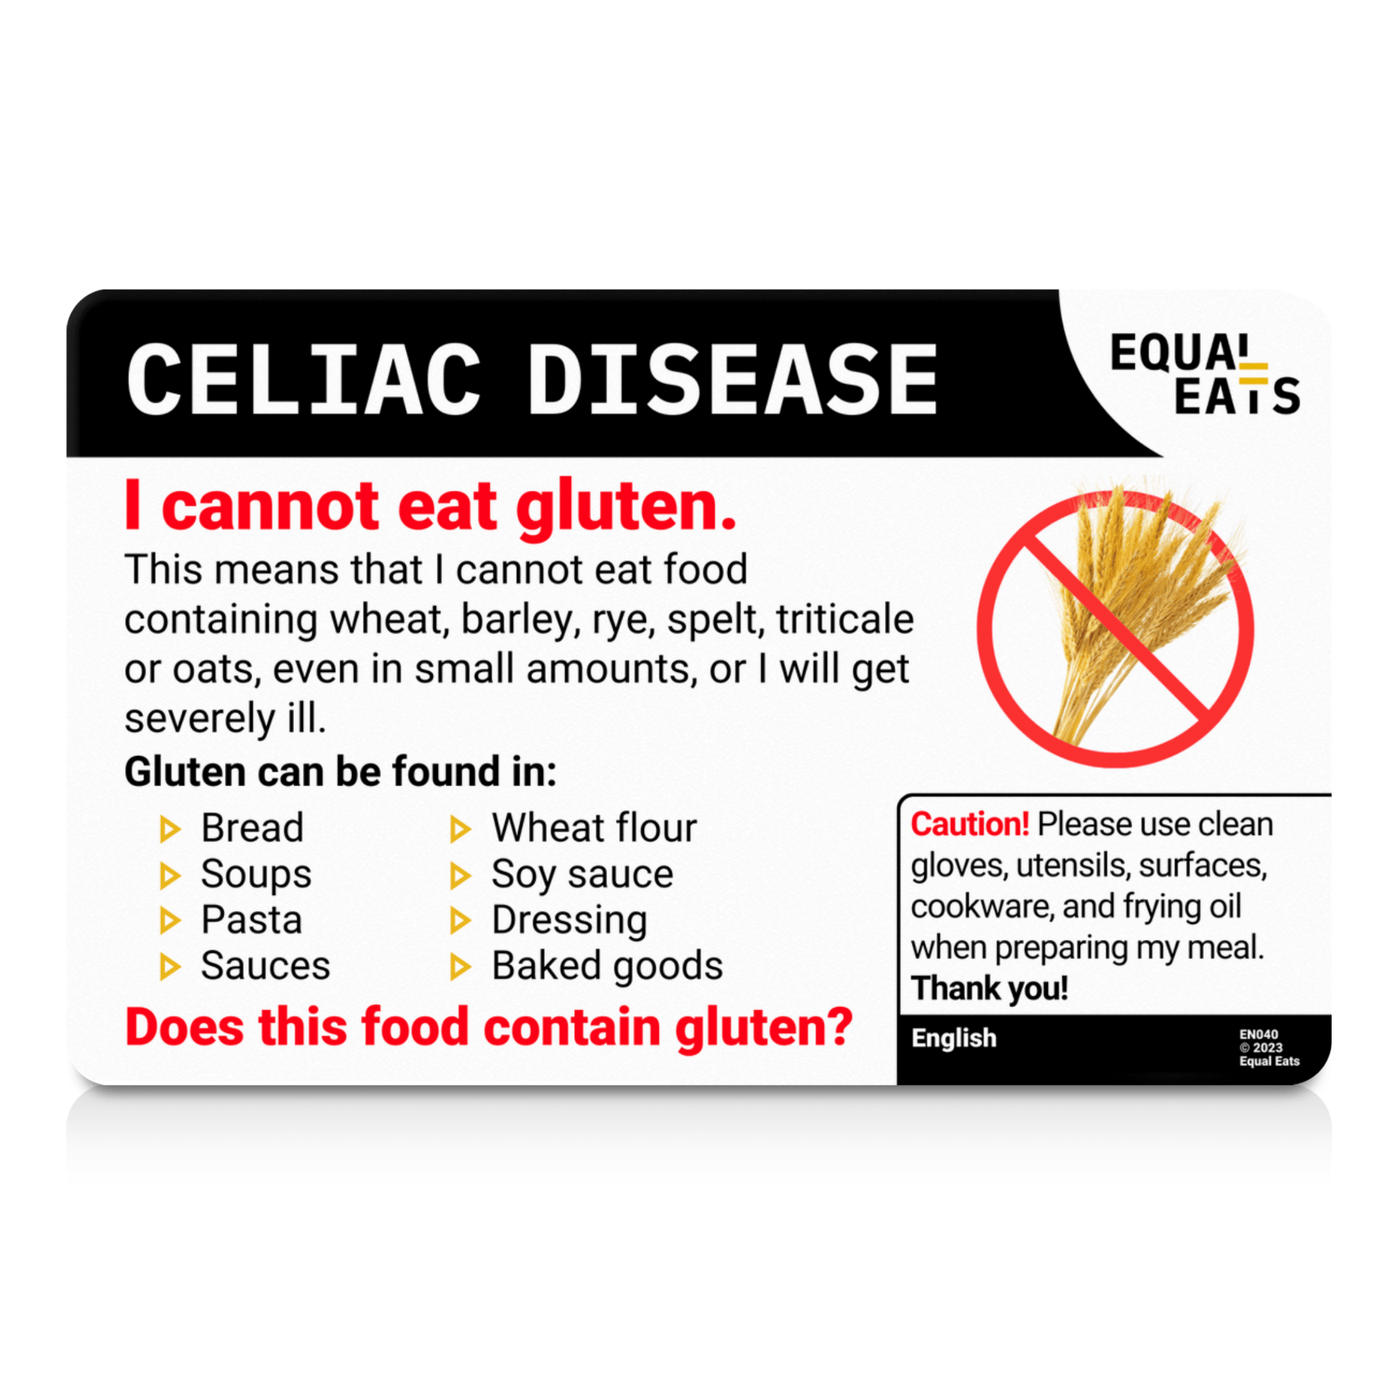 French Celiac Disease Card